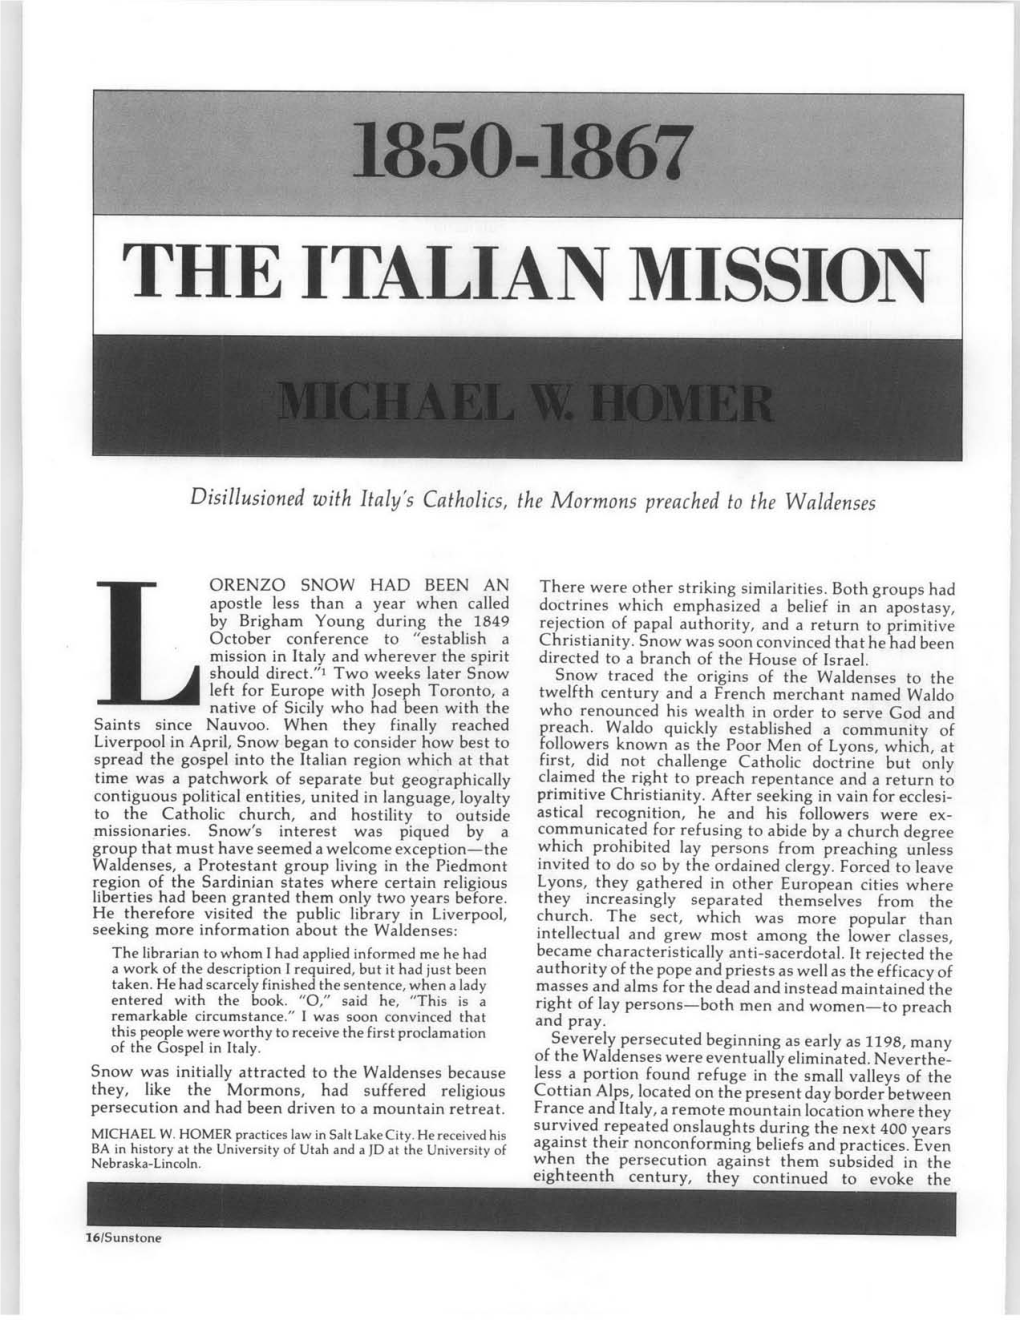 The Italian Mission